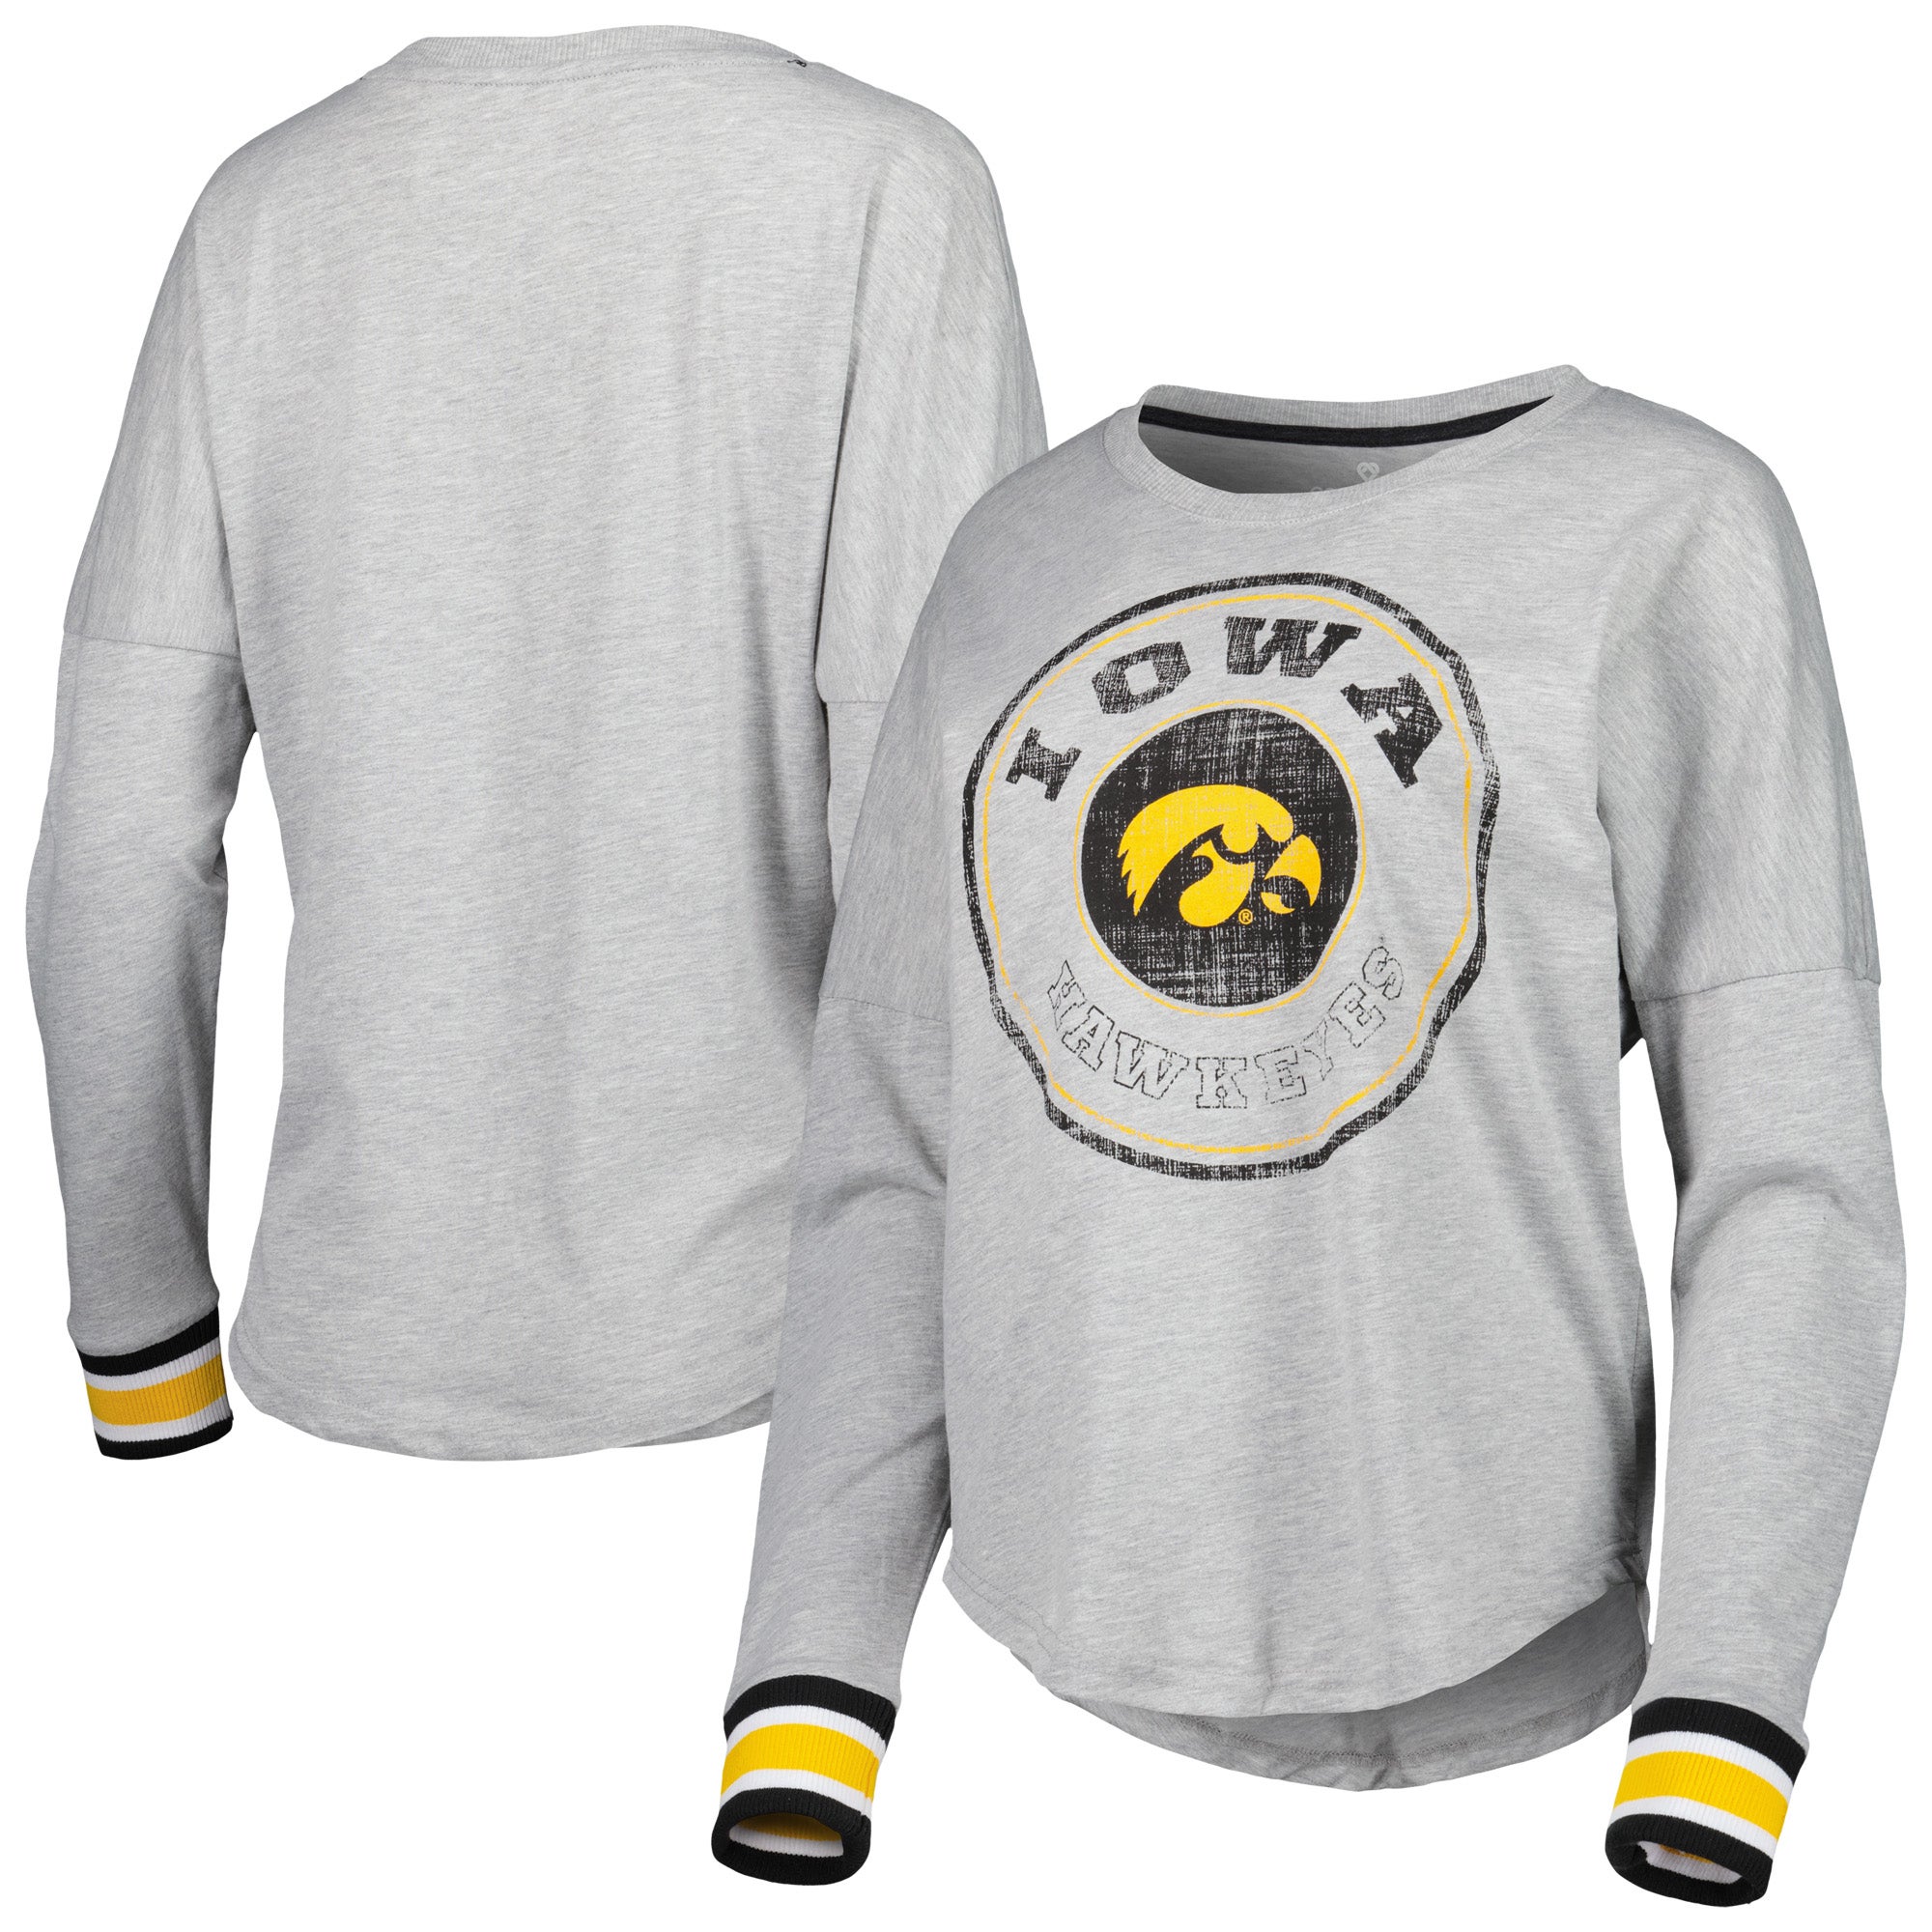 Colosseum Iowa Andy Long Sleeve T-Shirt - Women's